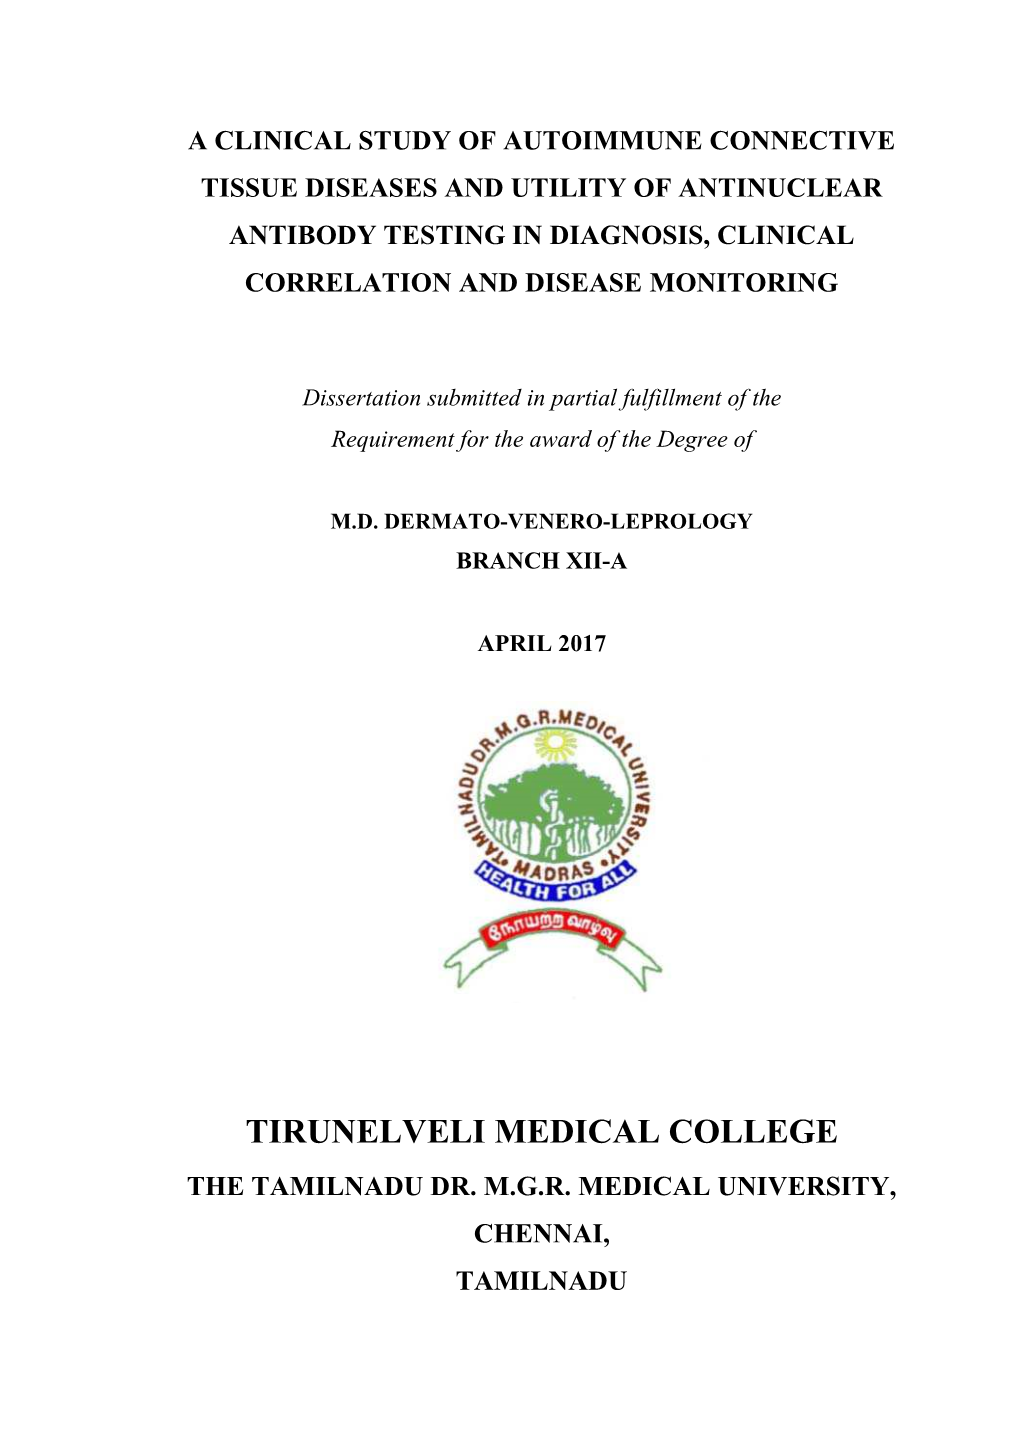 Tirunelveli Medical College the Tamilnadu Dr